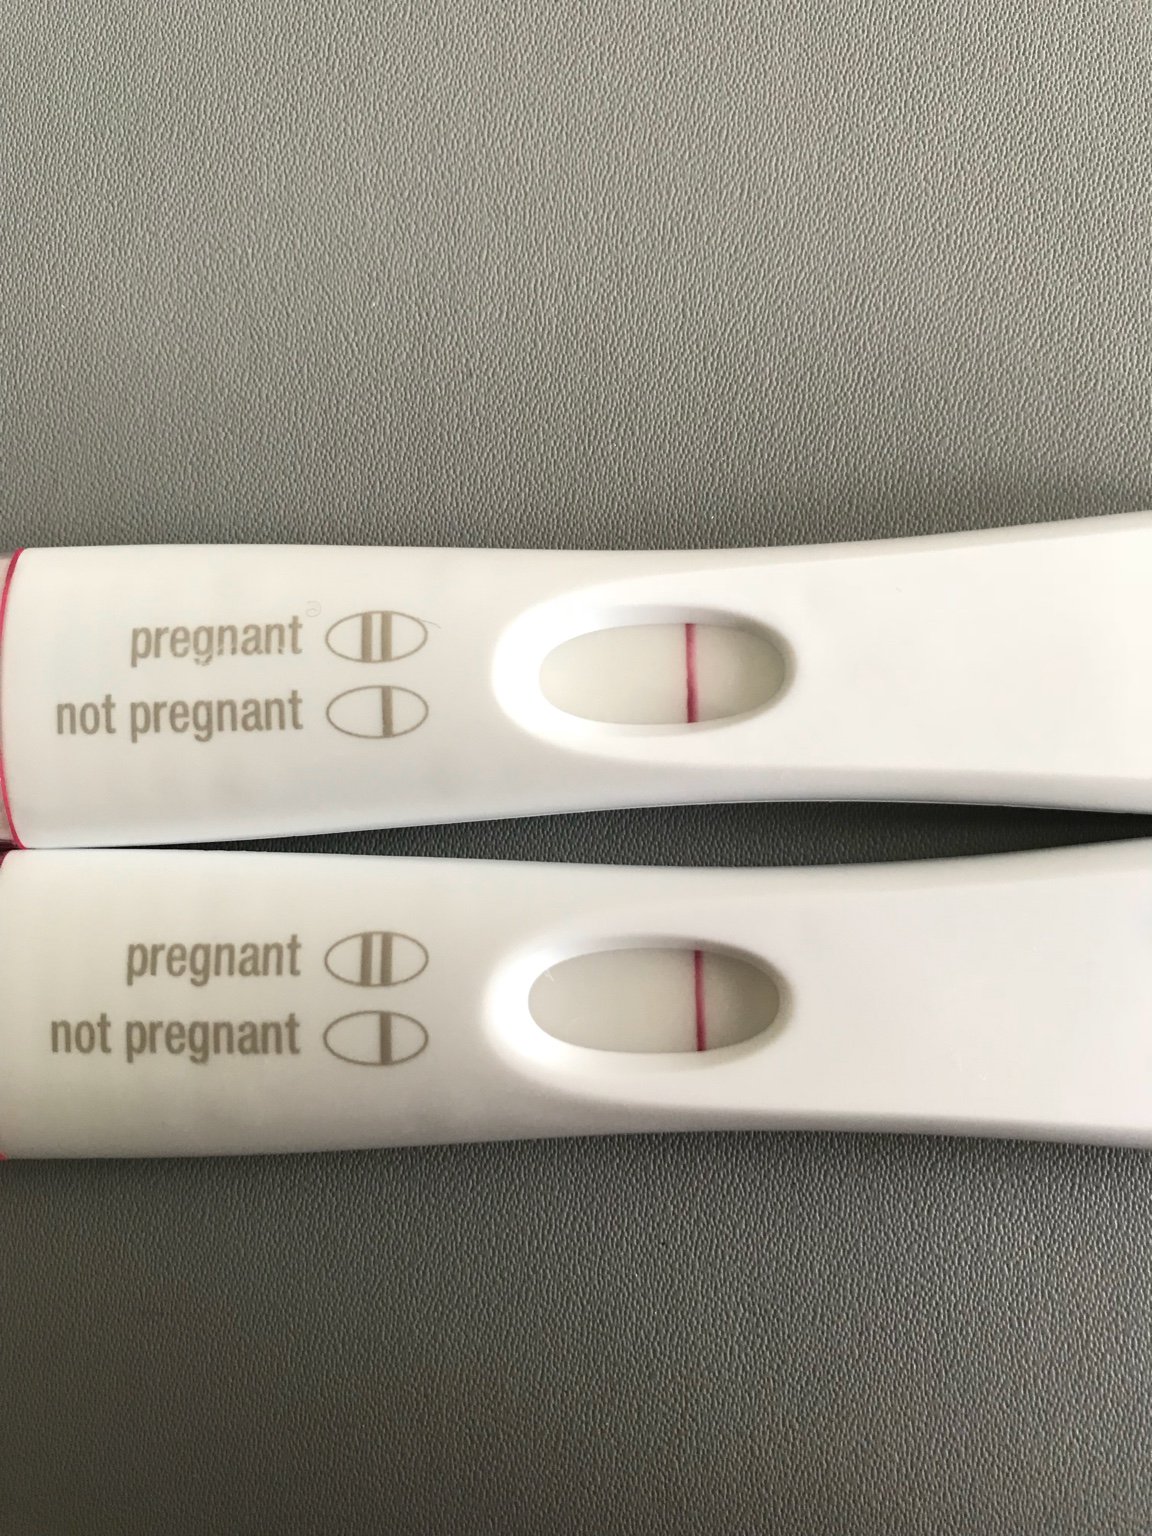 pregnancy test 14dpo